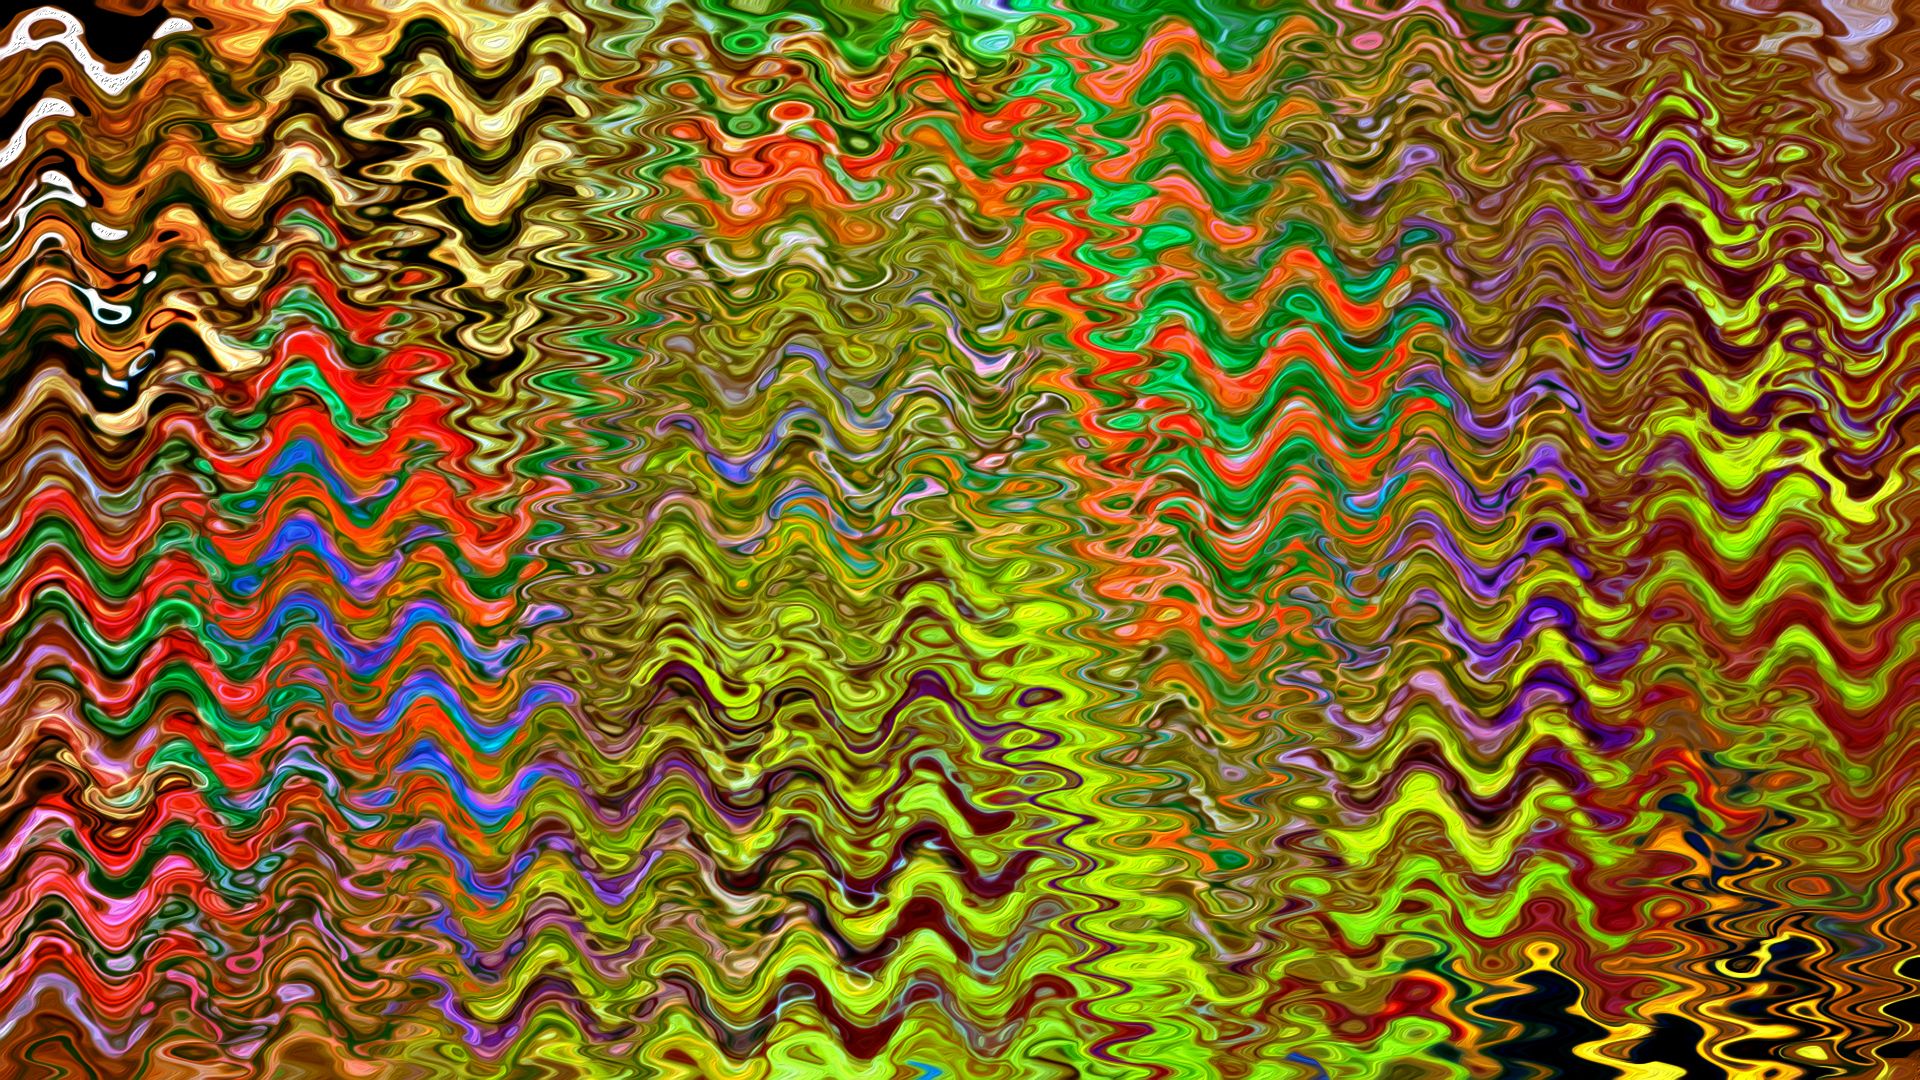 Artistic Rainbow Digital Art Wave HD Abstract Wallpaper